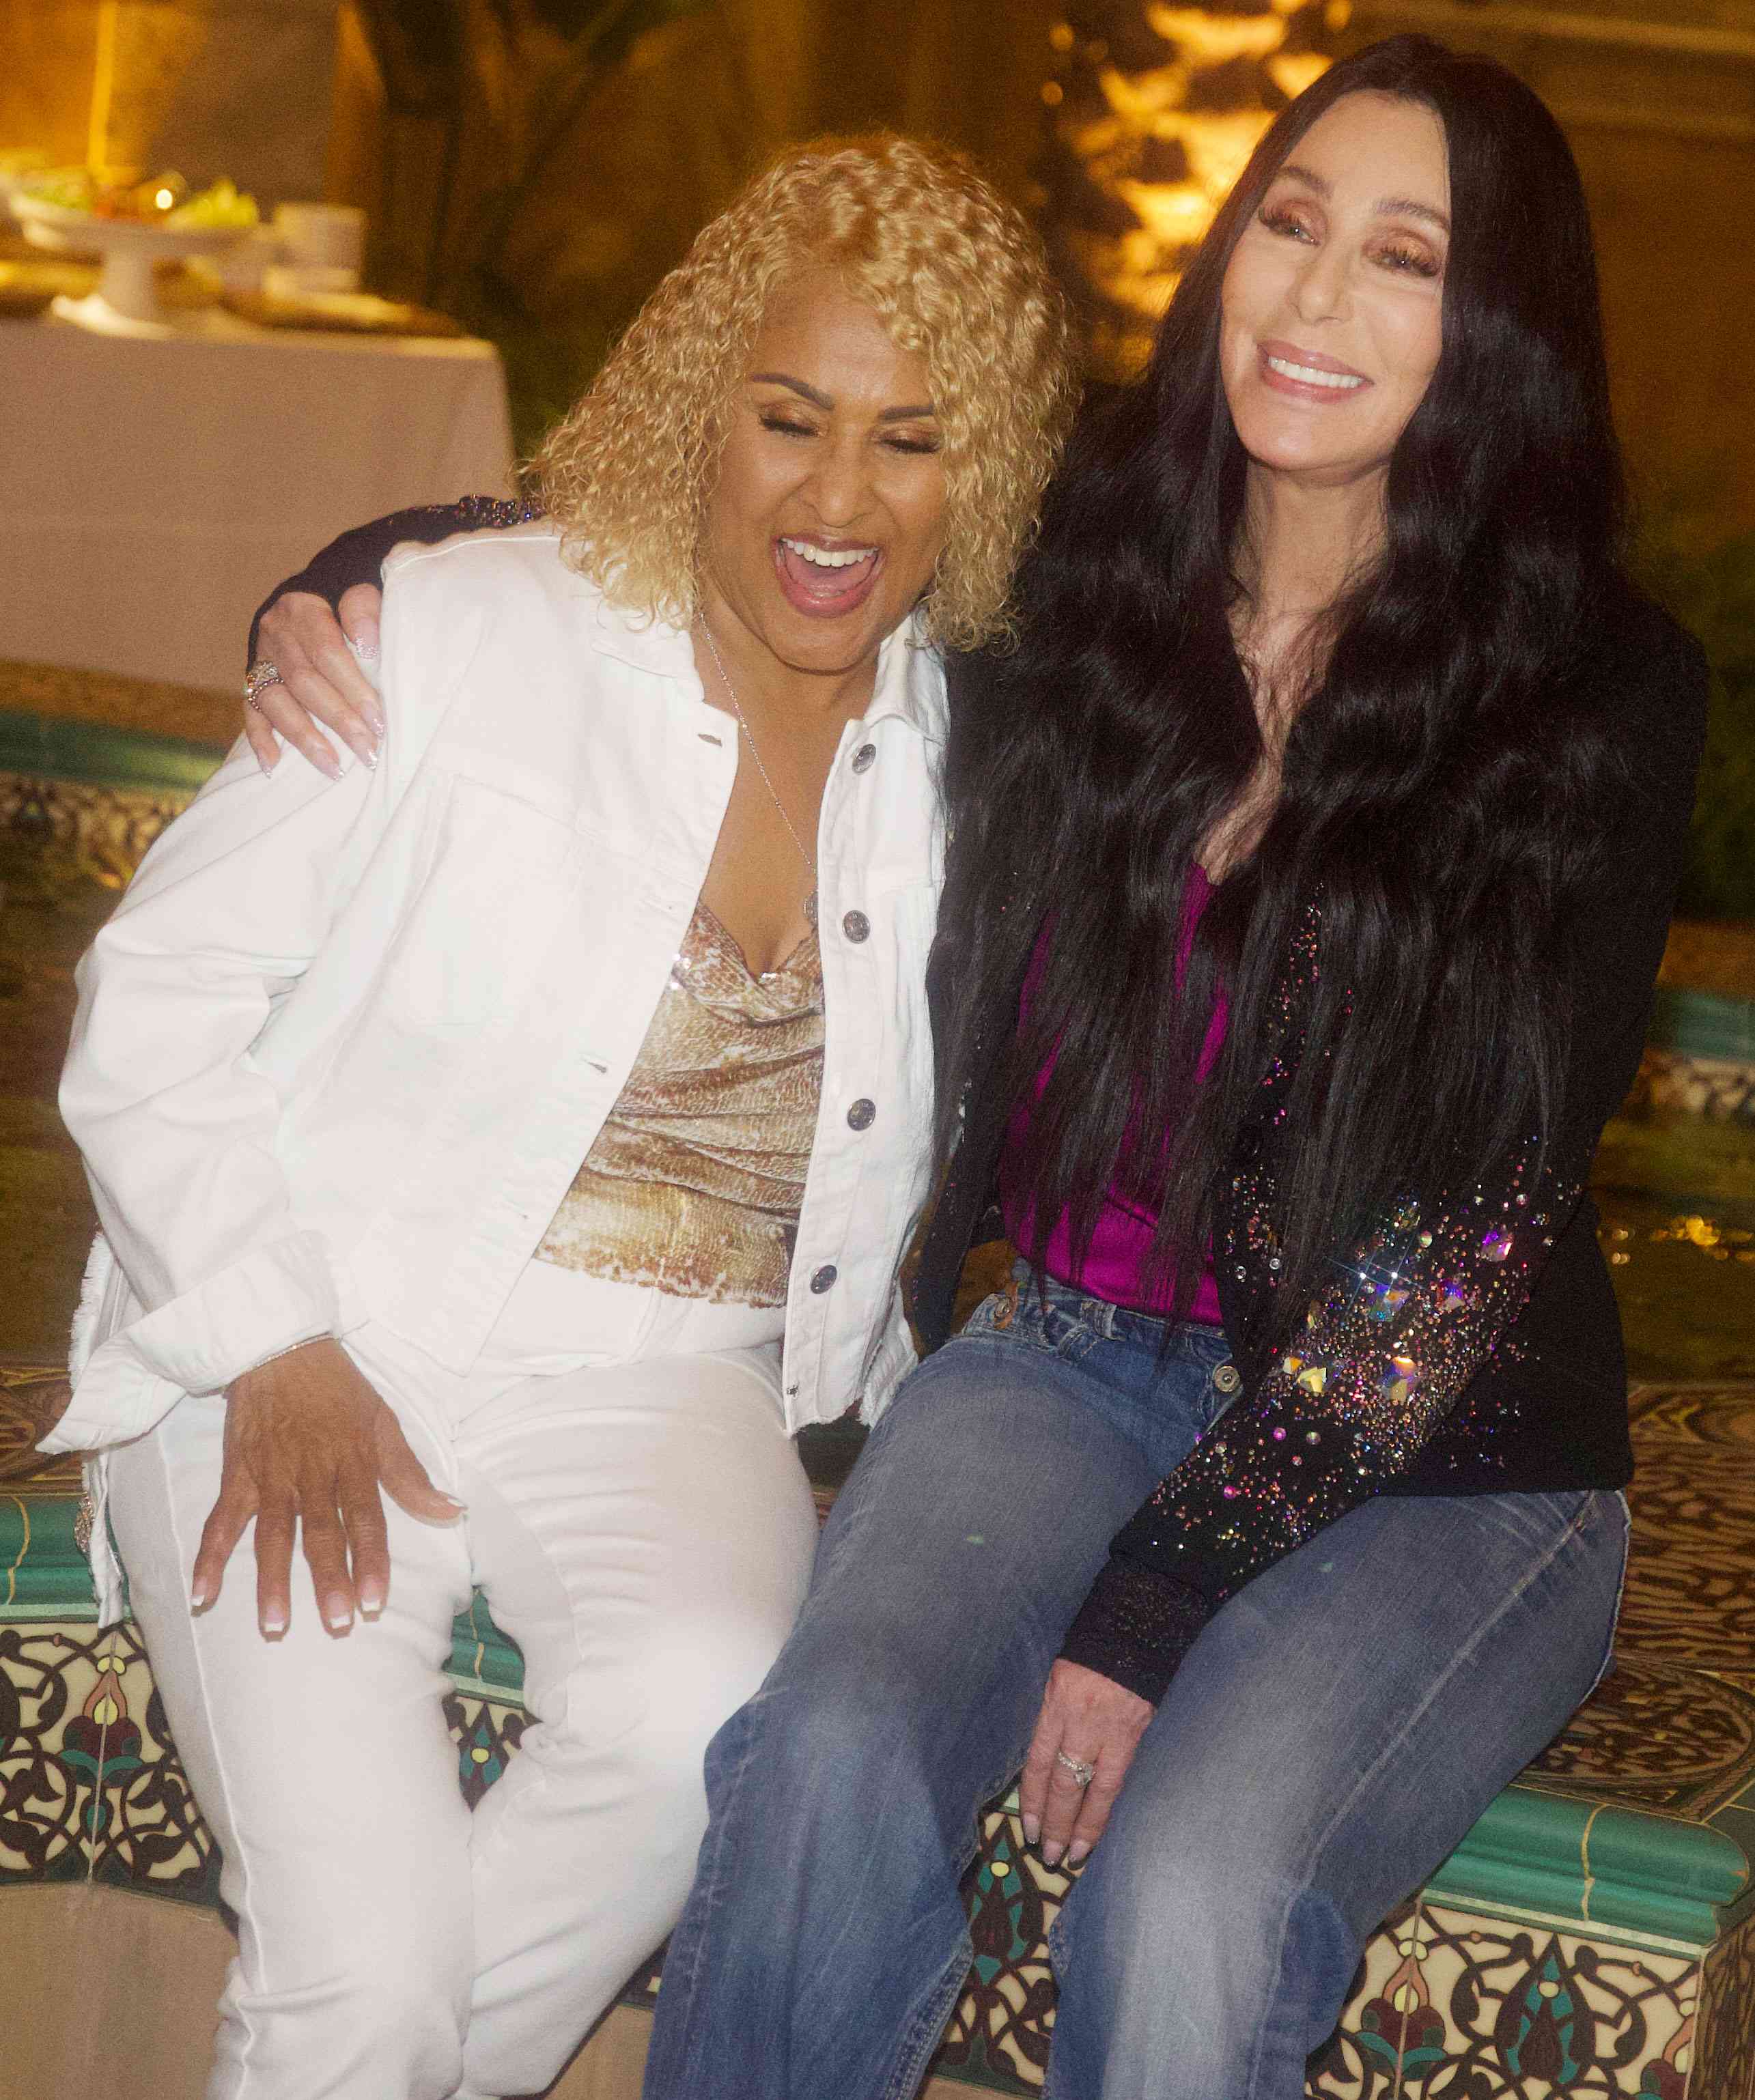 Cher and Darlene Love